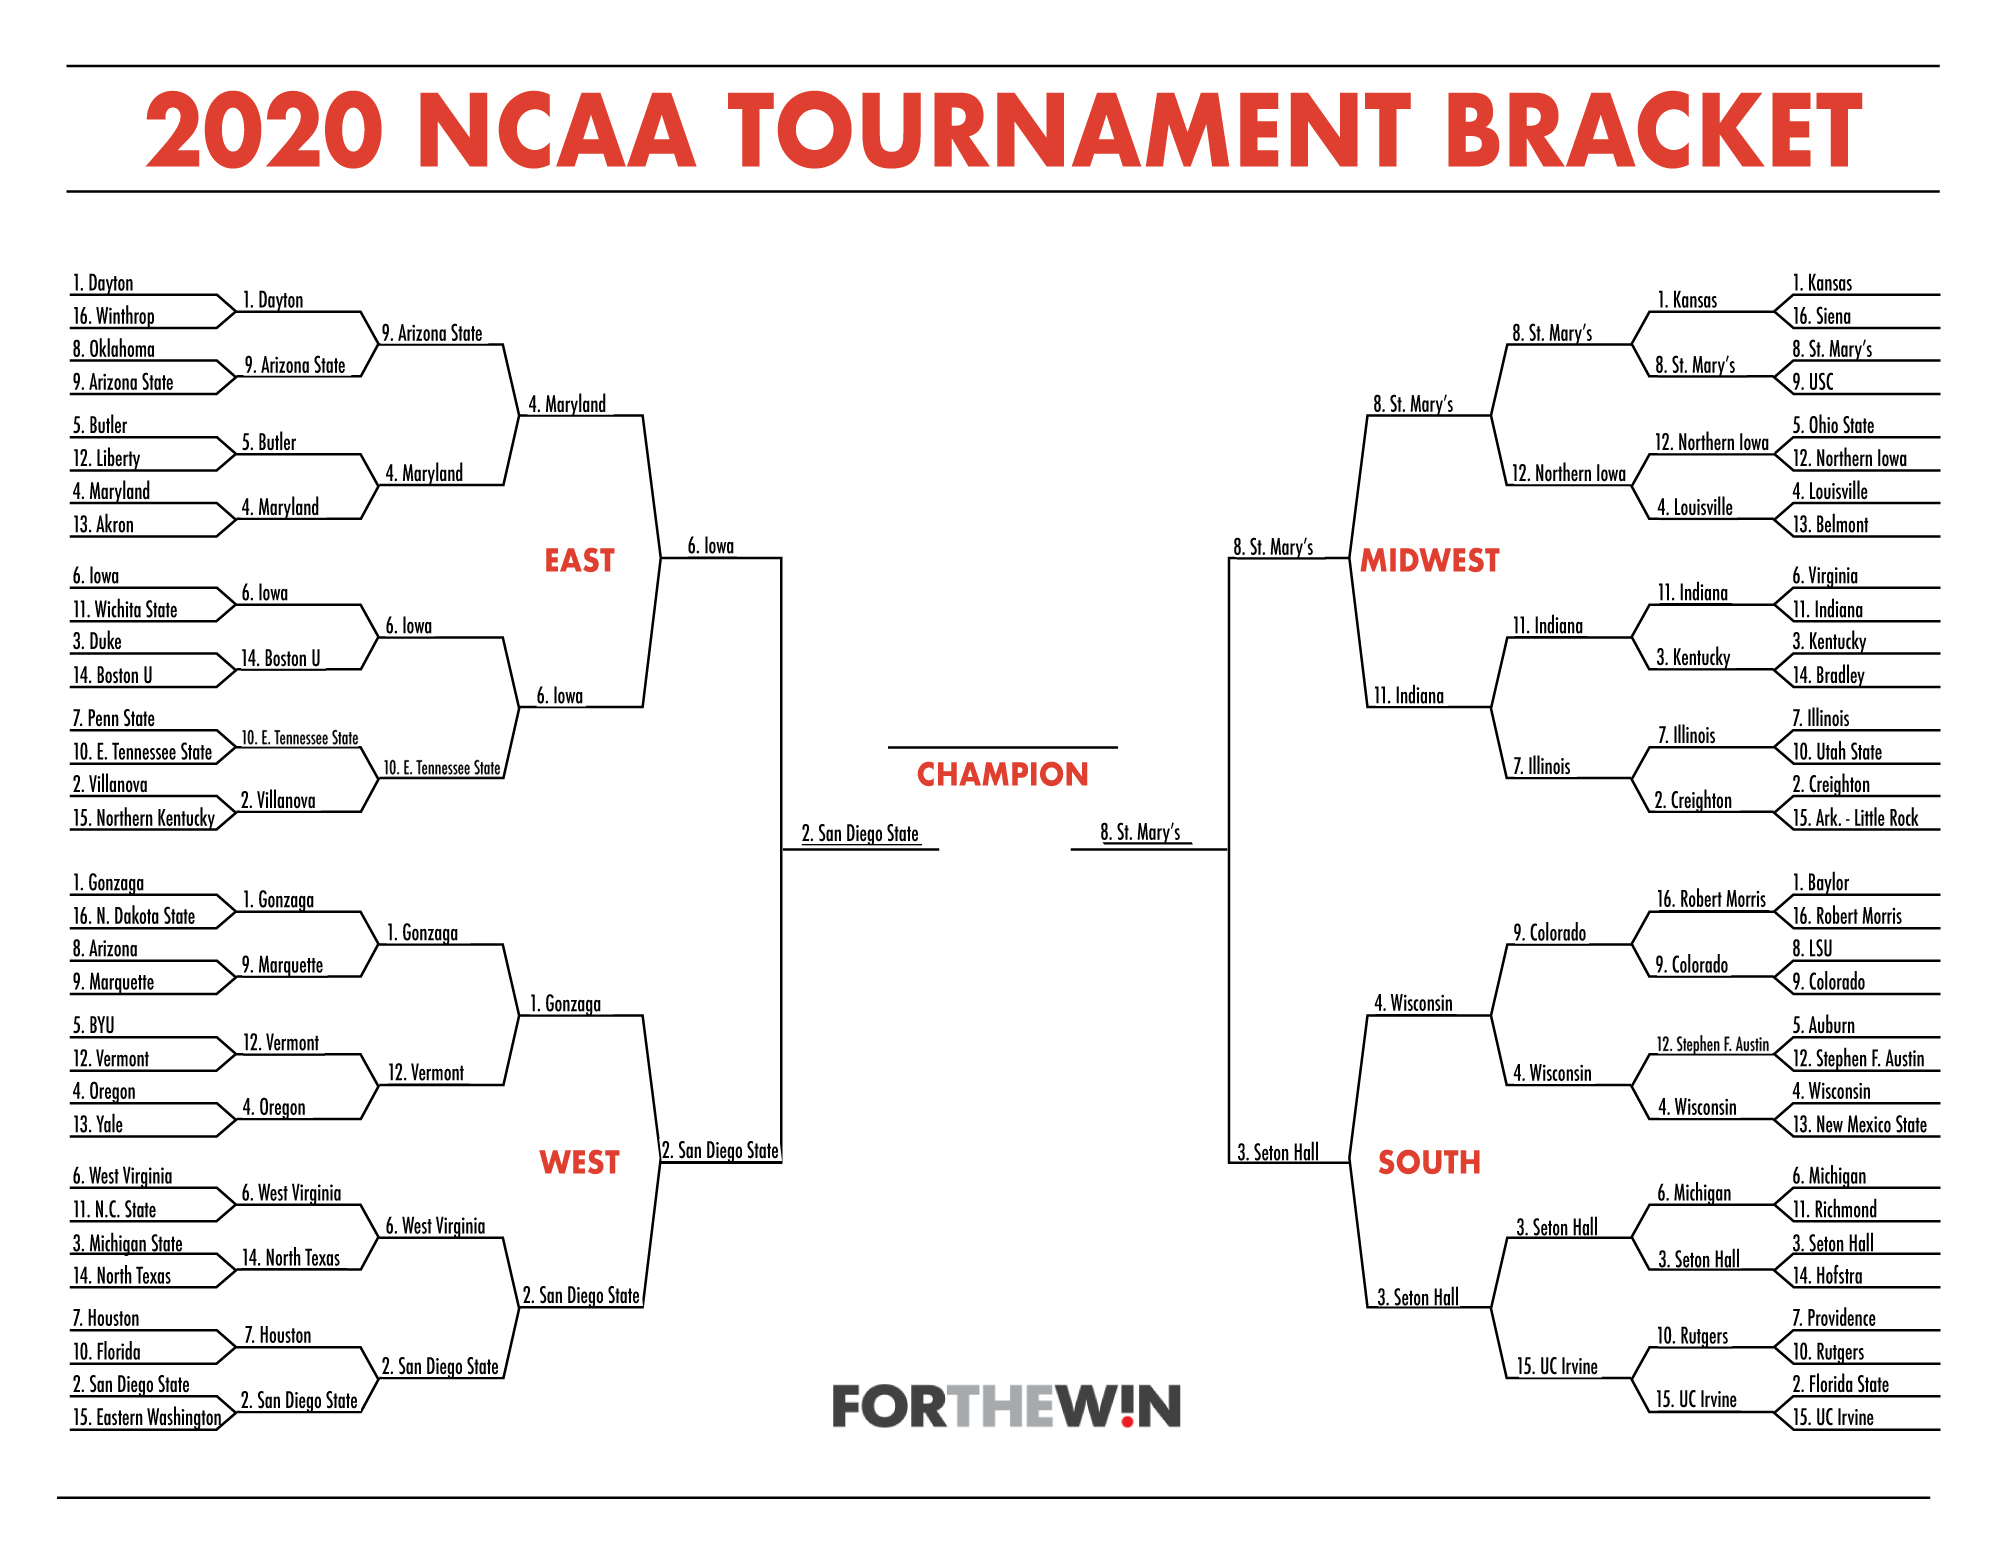 2020 NCAA Tournament Bracket: Vote in the championship